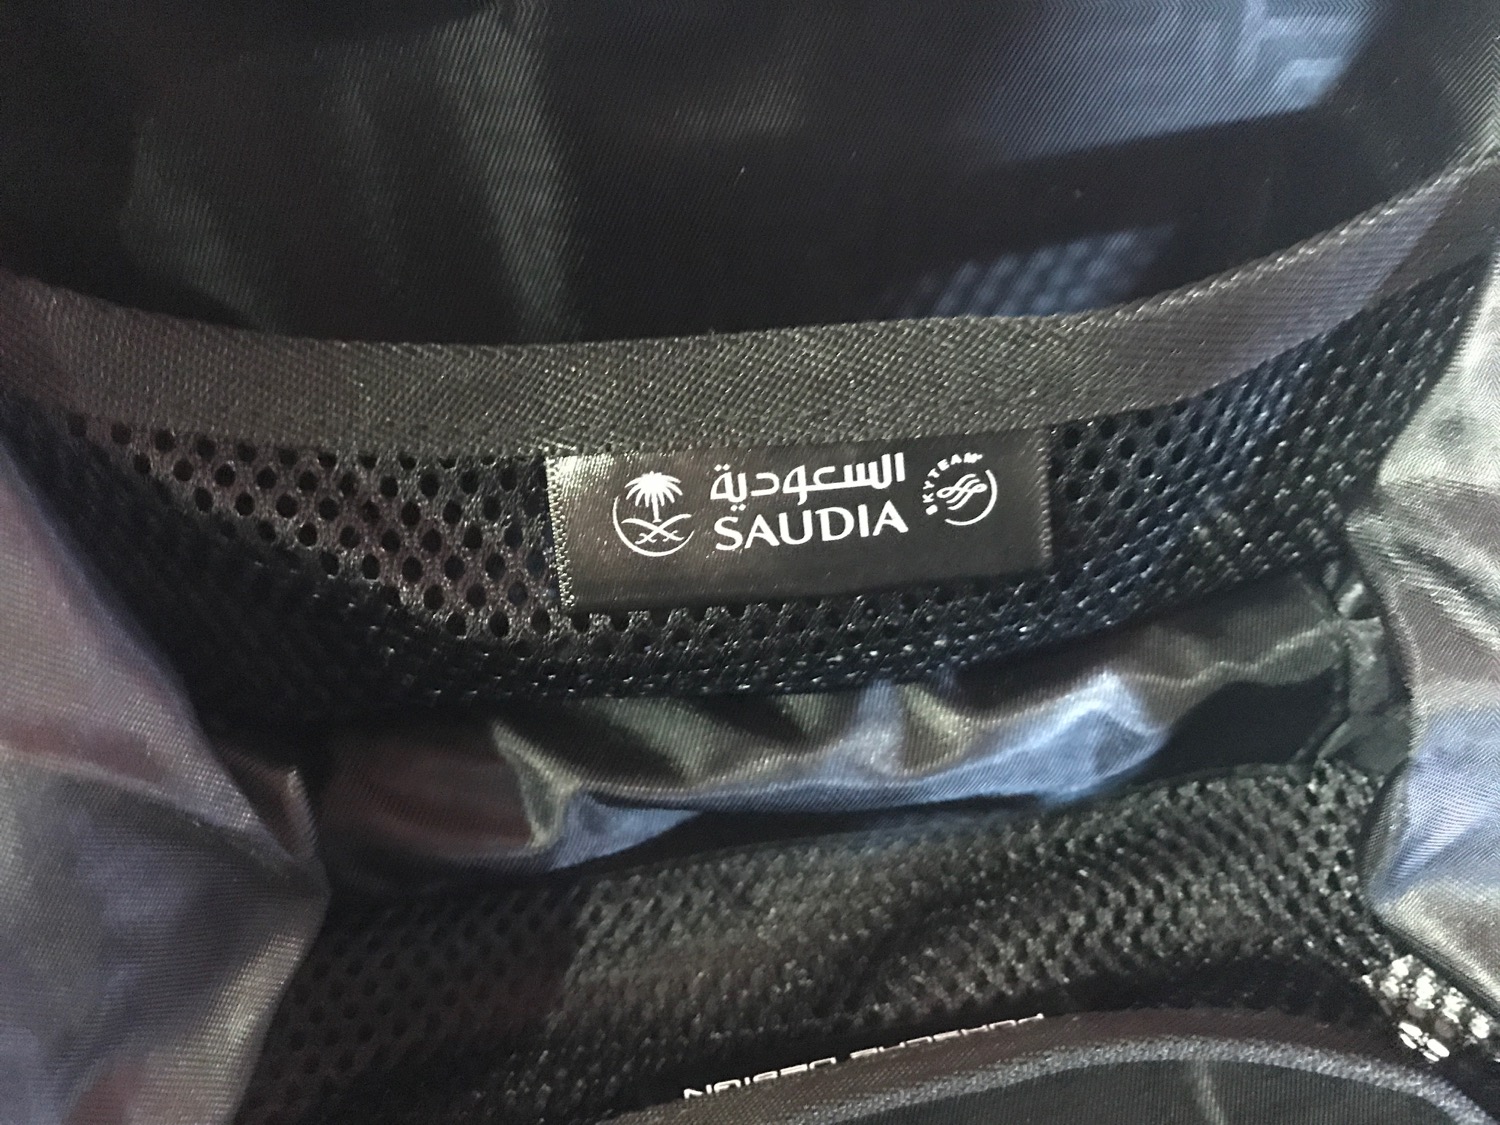 black bag with label